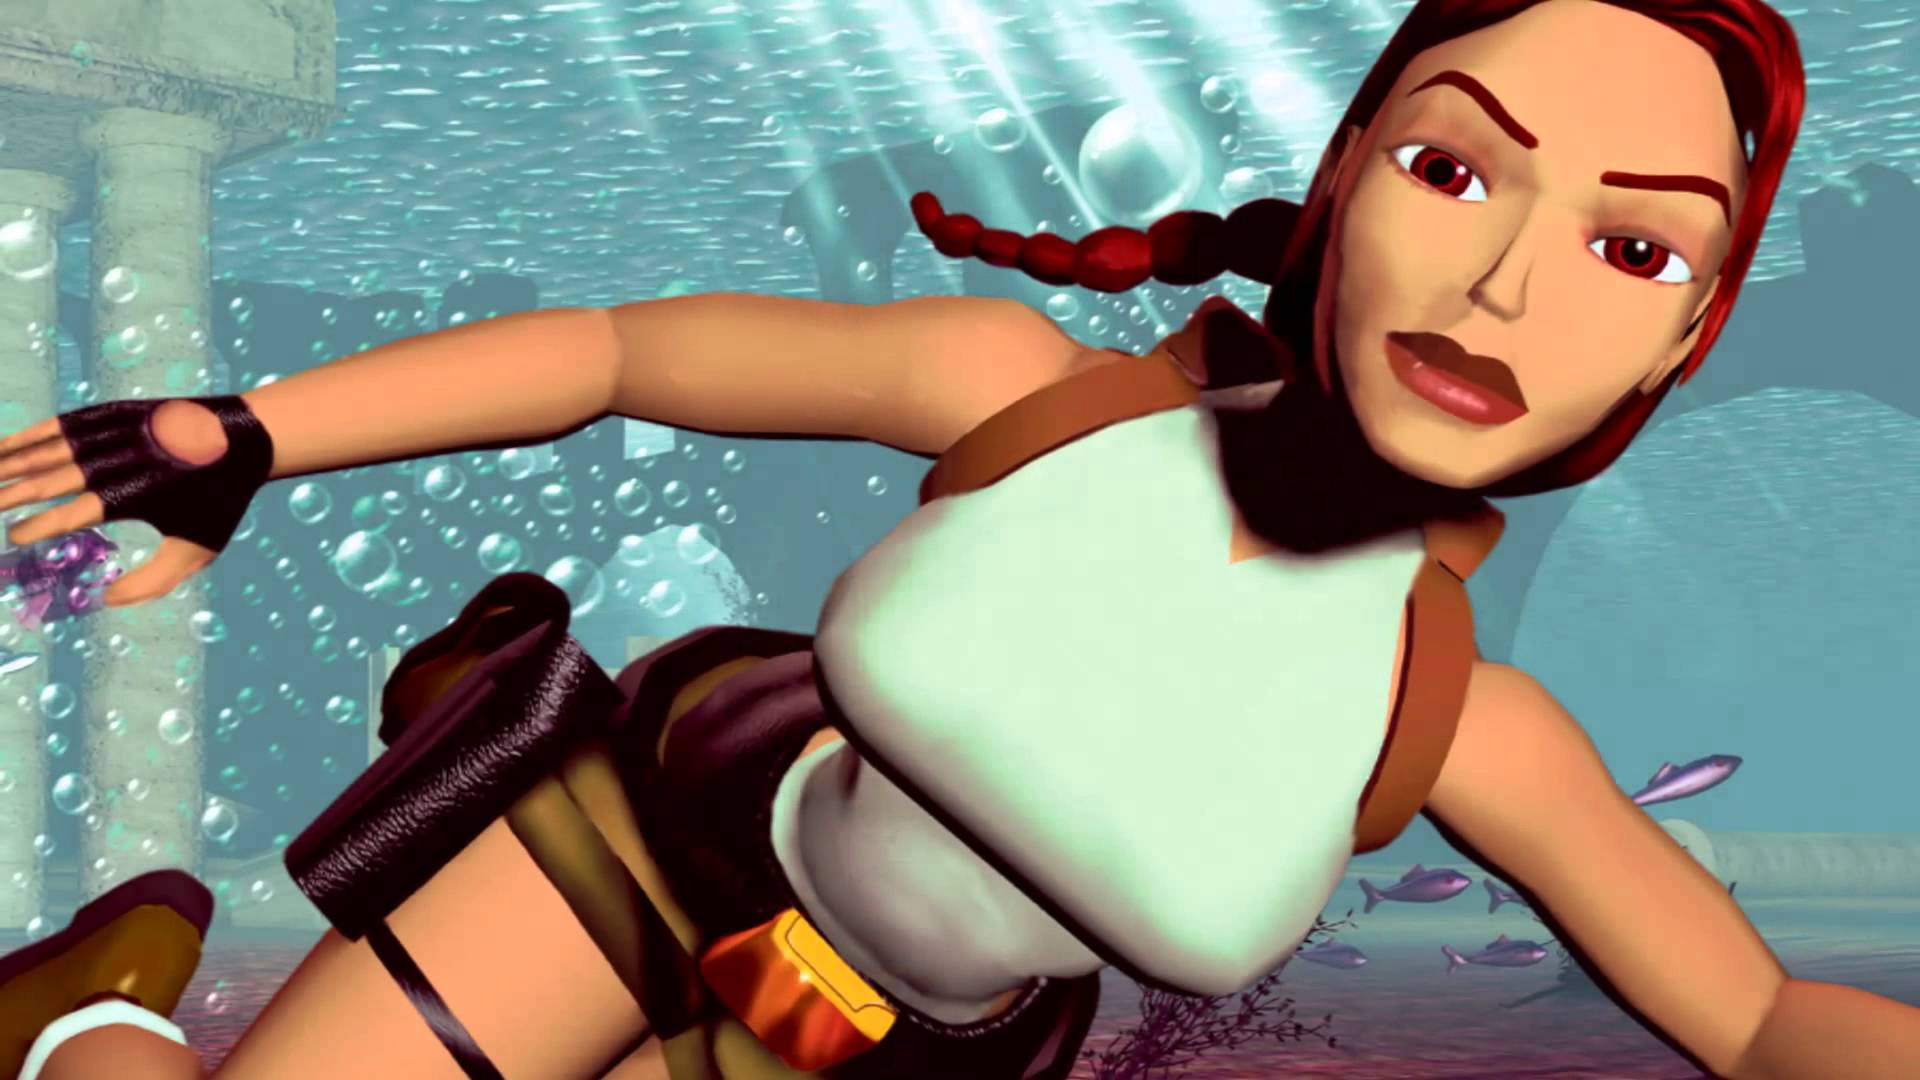 Tomb Raider II HD wallpapers, Desktop wallpaper - most viewed